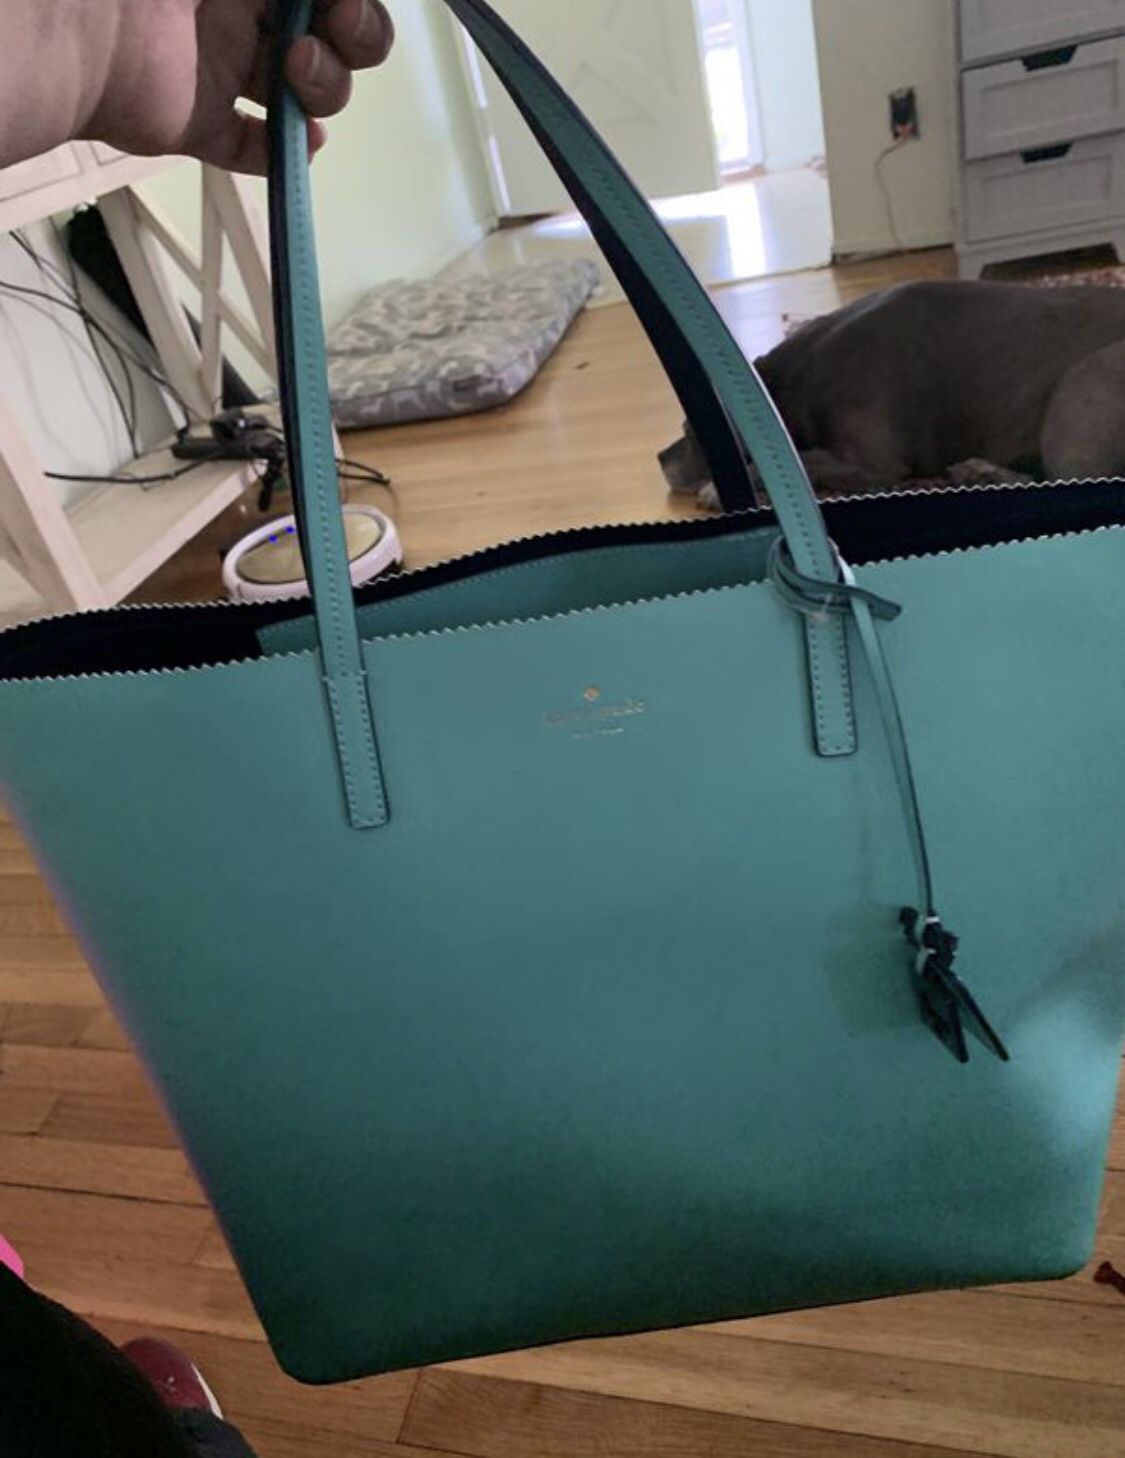 Kate Spade bag/tote/purse - never used